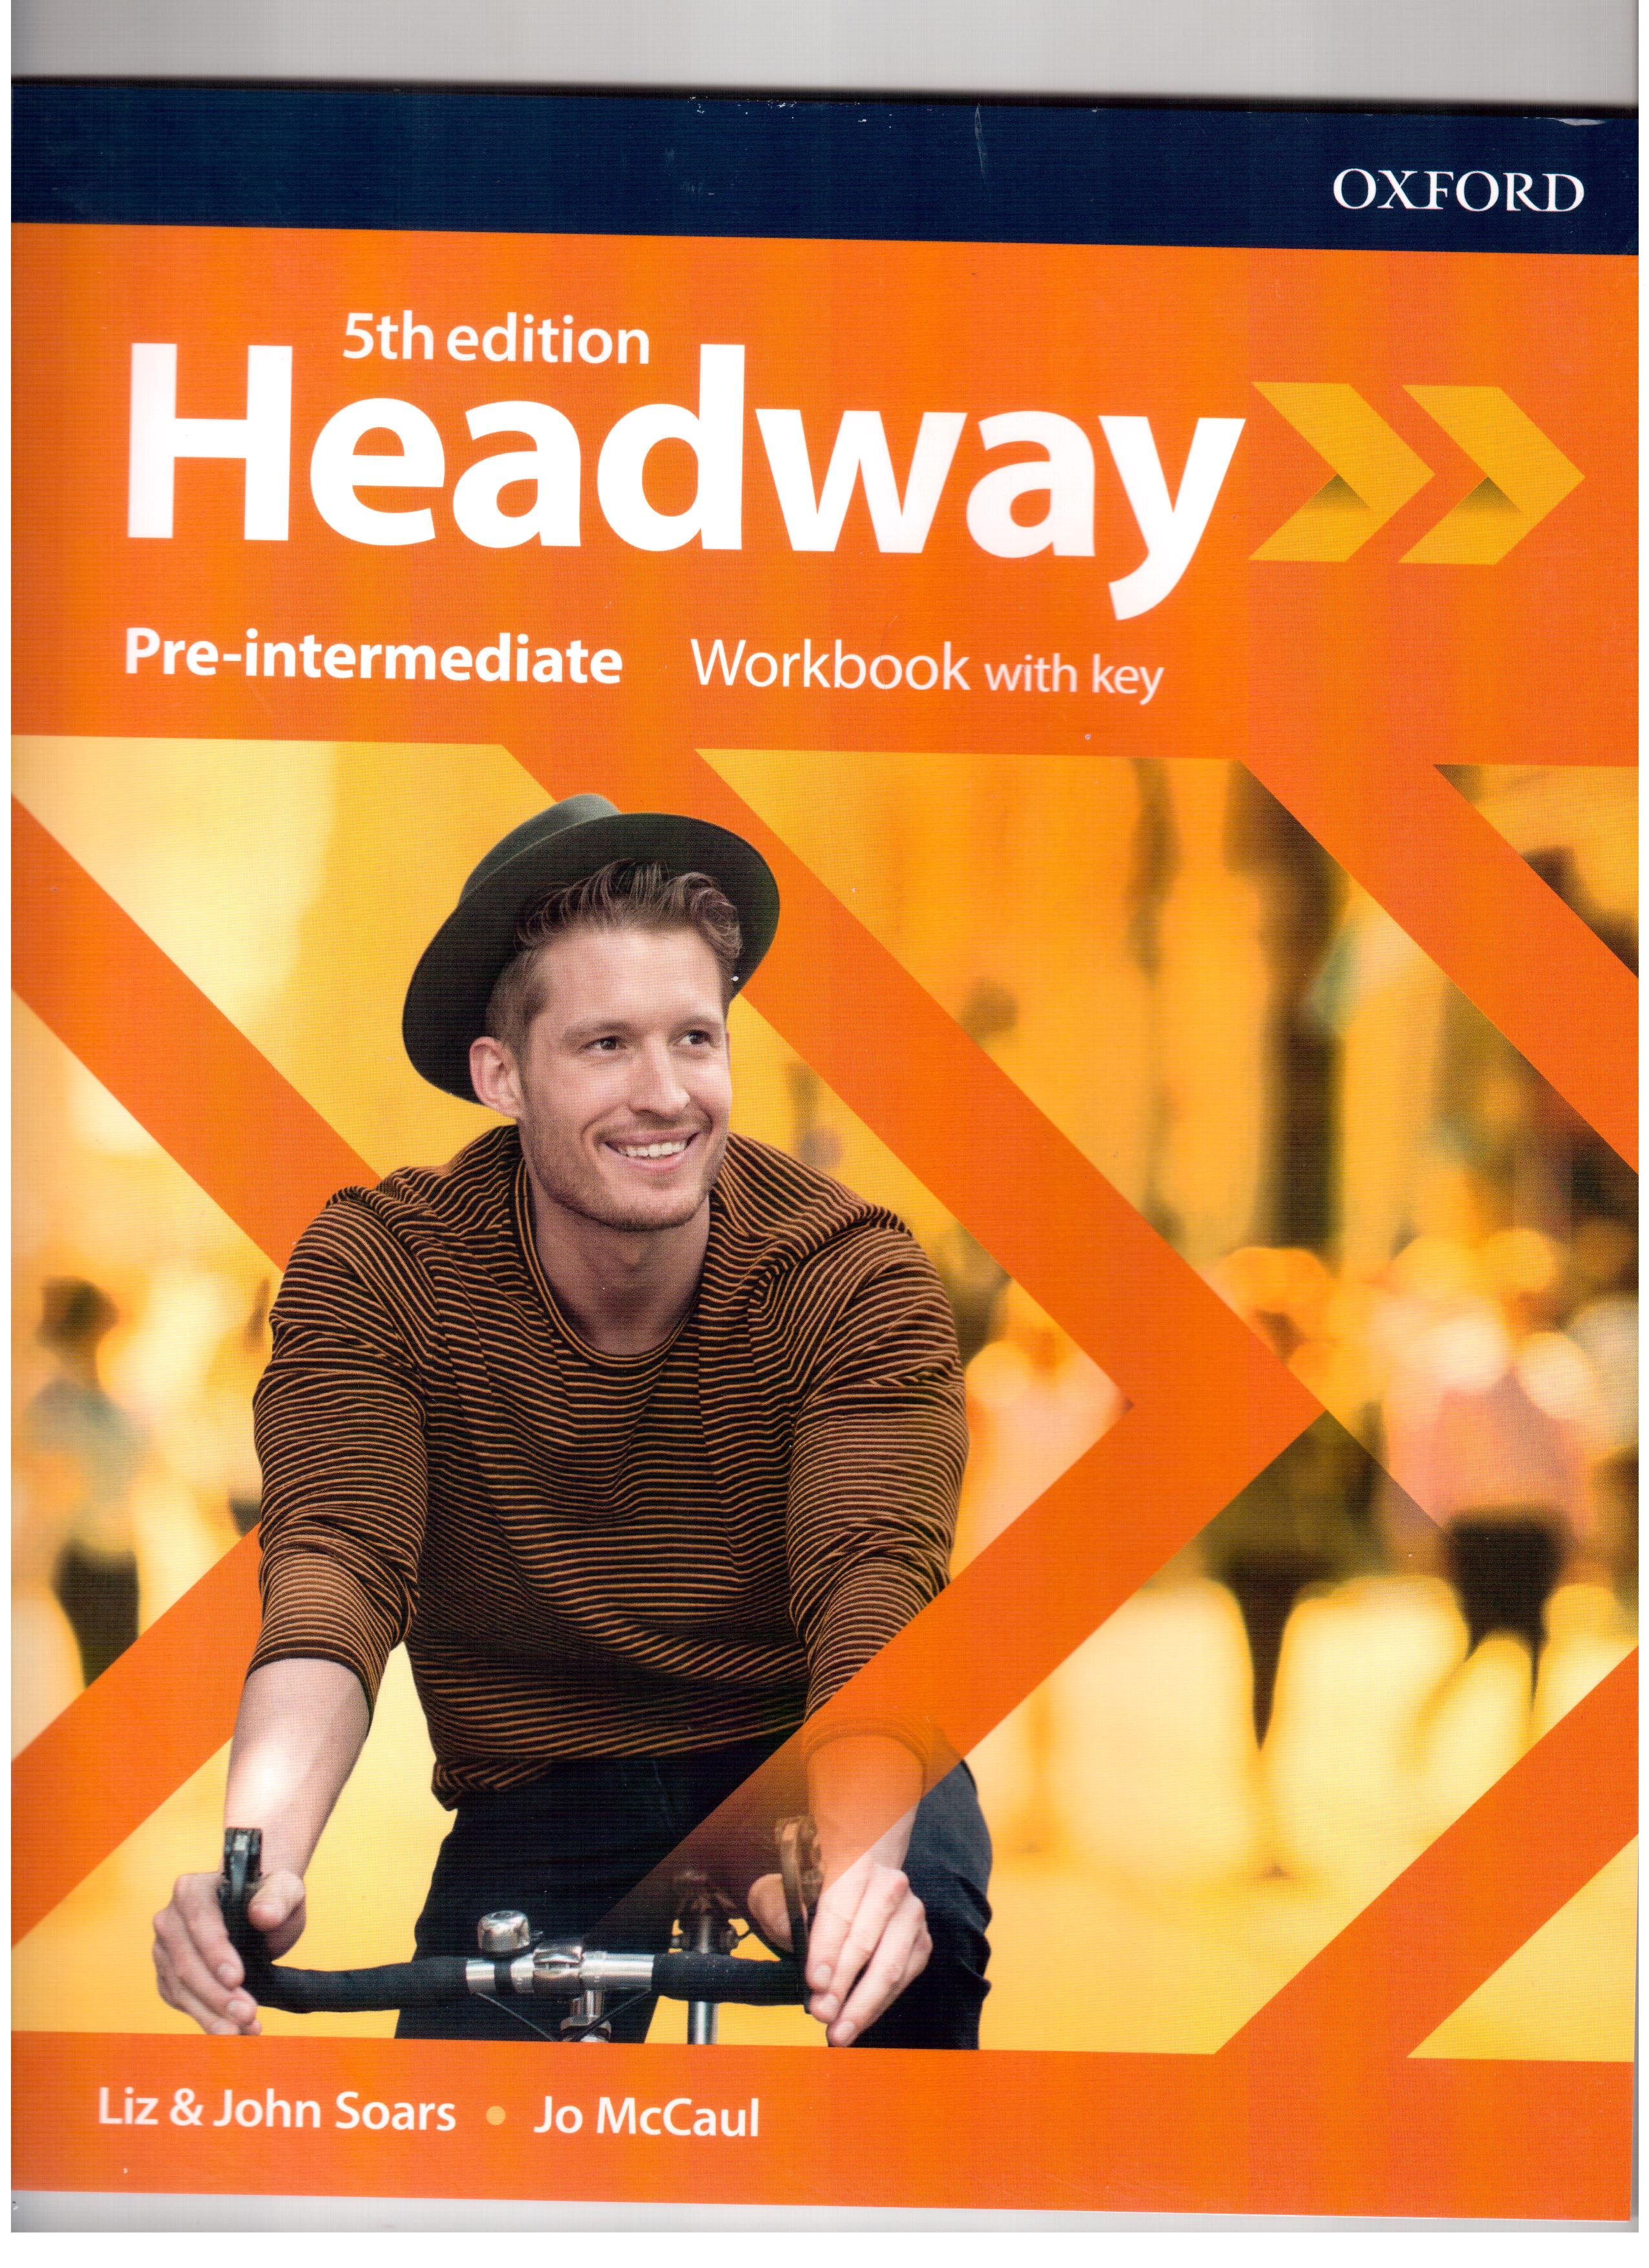 New headway intermediate workbook. Oxford 5th Edition Headway. Headway pre-Intermediate 5th Edition. 5th Headway pre Intermediate Workbook with Key. New Headway 5th Edition pre Intermediate.